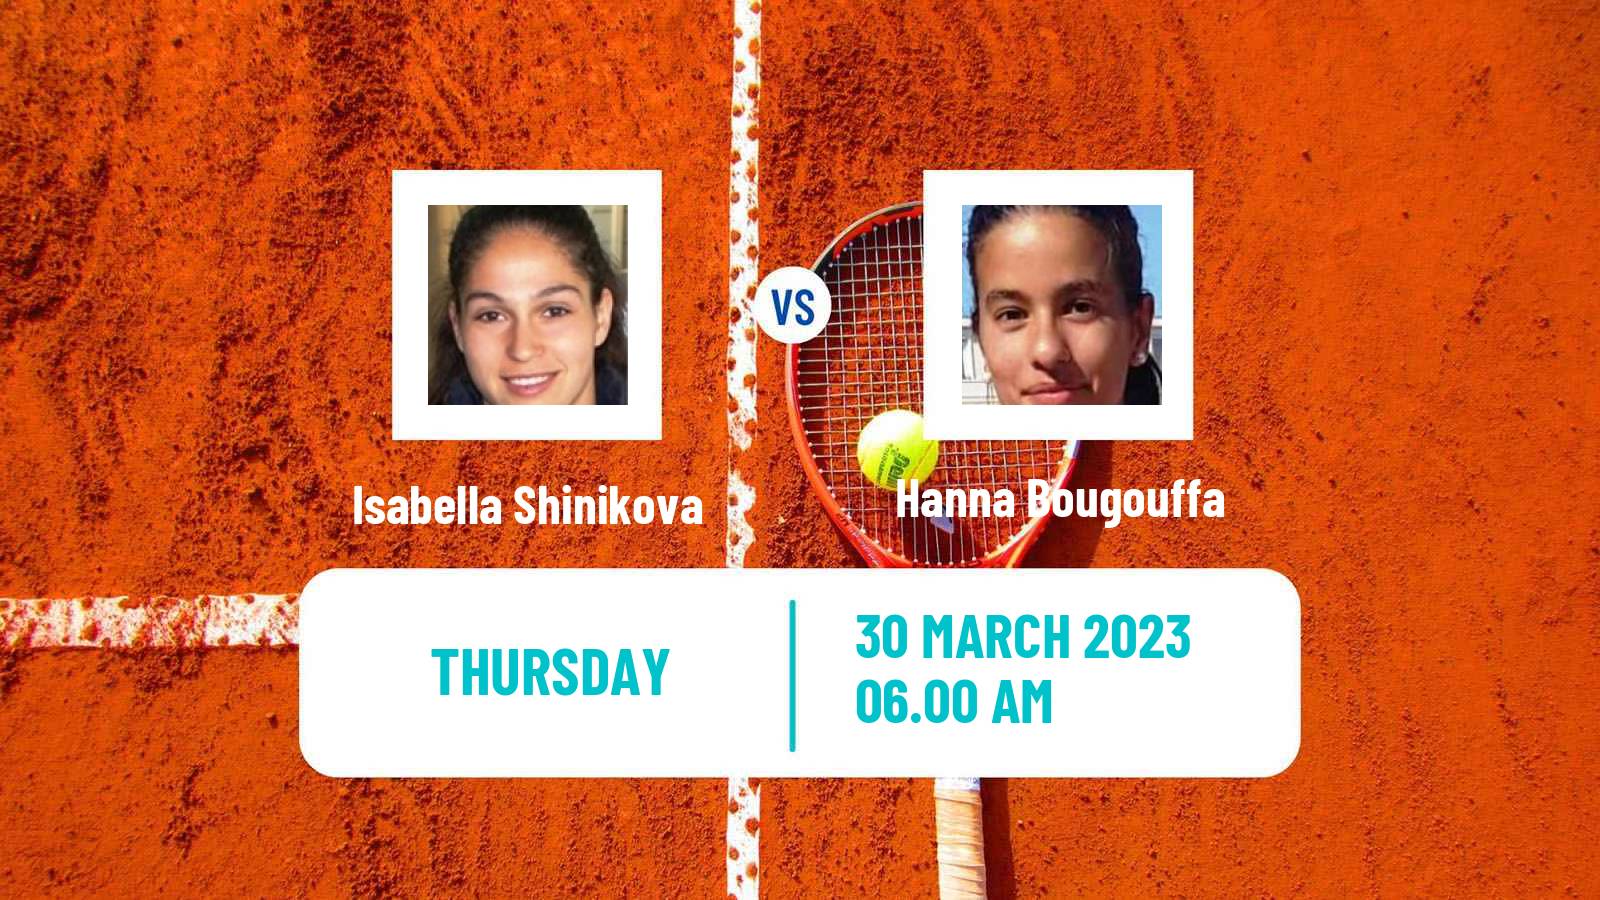 Tennis ITF Tournaments Isabella Shinikova - Hanna Bougouffa